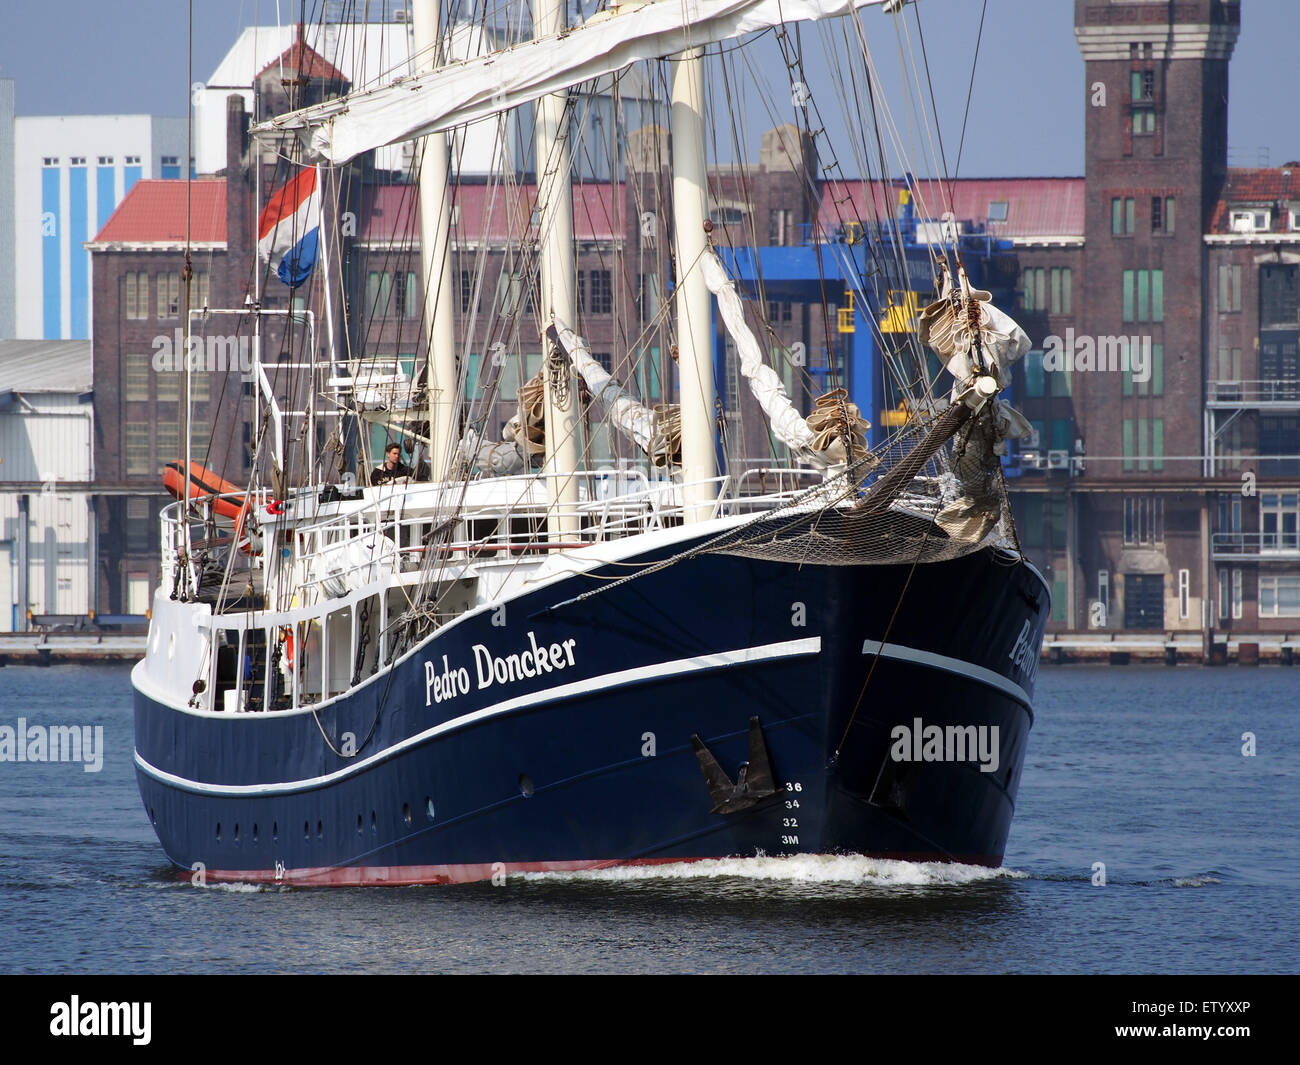 PEDRO DONCKER, IMO 8136154, Noordzeekanaal, Port of Amsterdam, pic4 Stock Photo